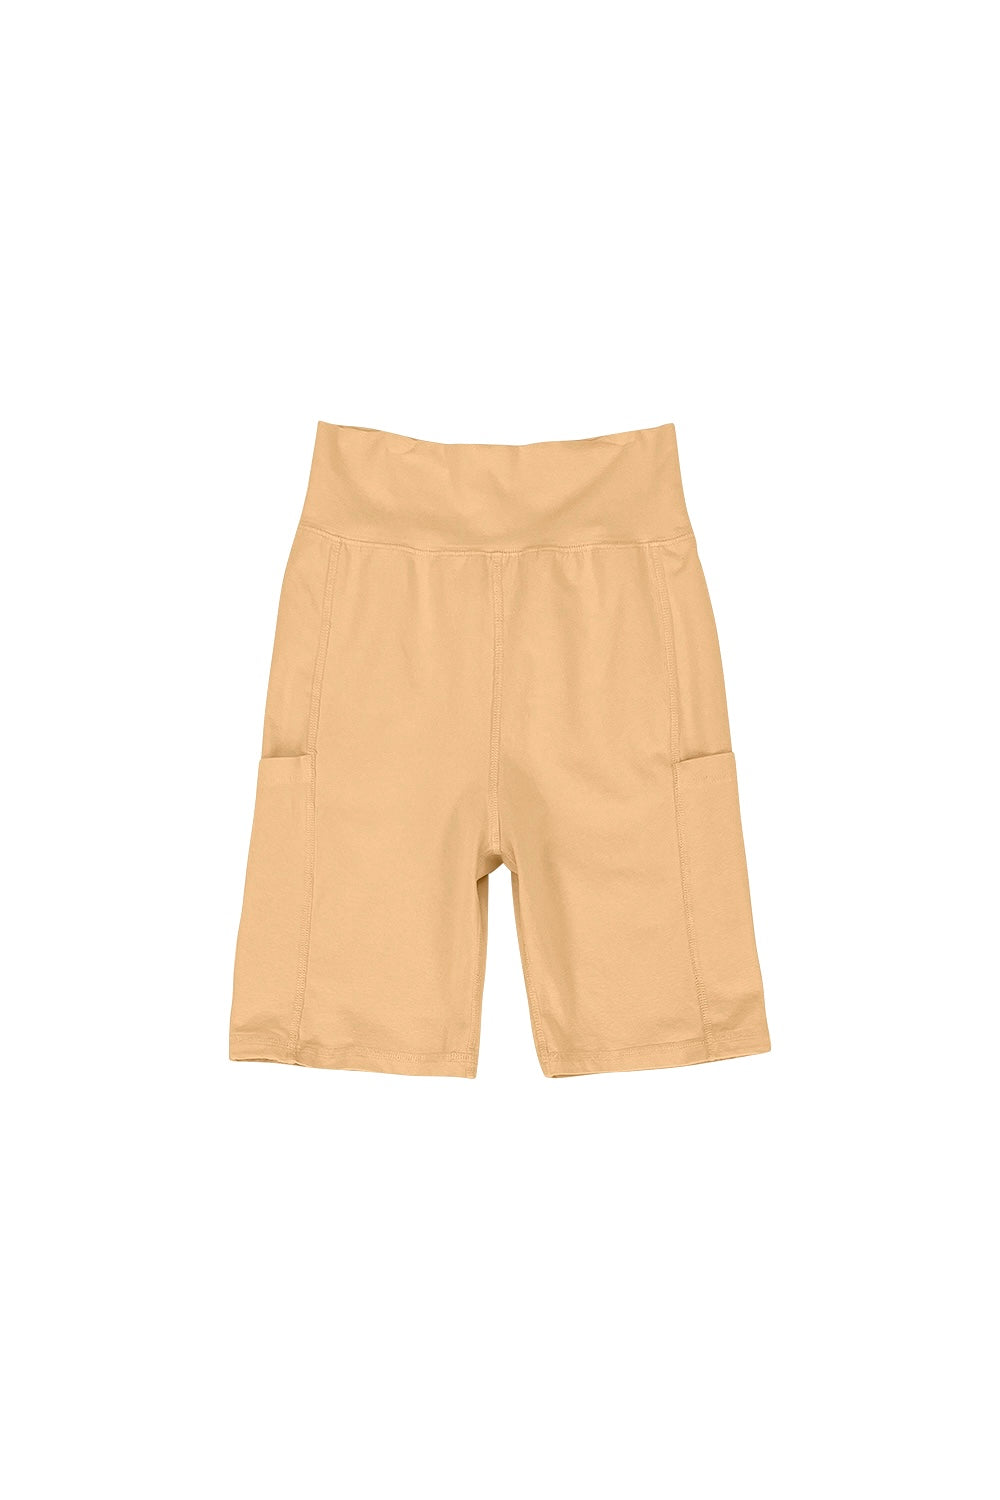 Bike Short with Pockets | Jungmaven Hemp Clothing & Accessories / Color: Oat Milk